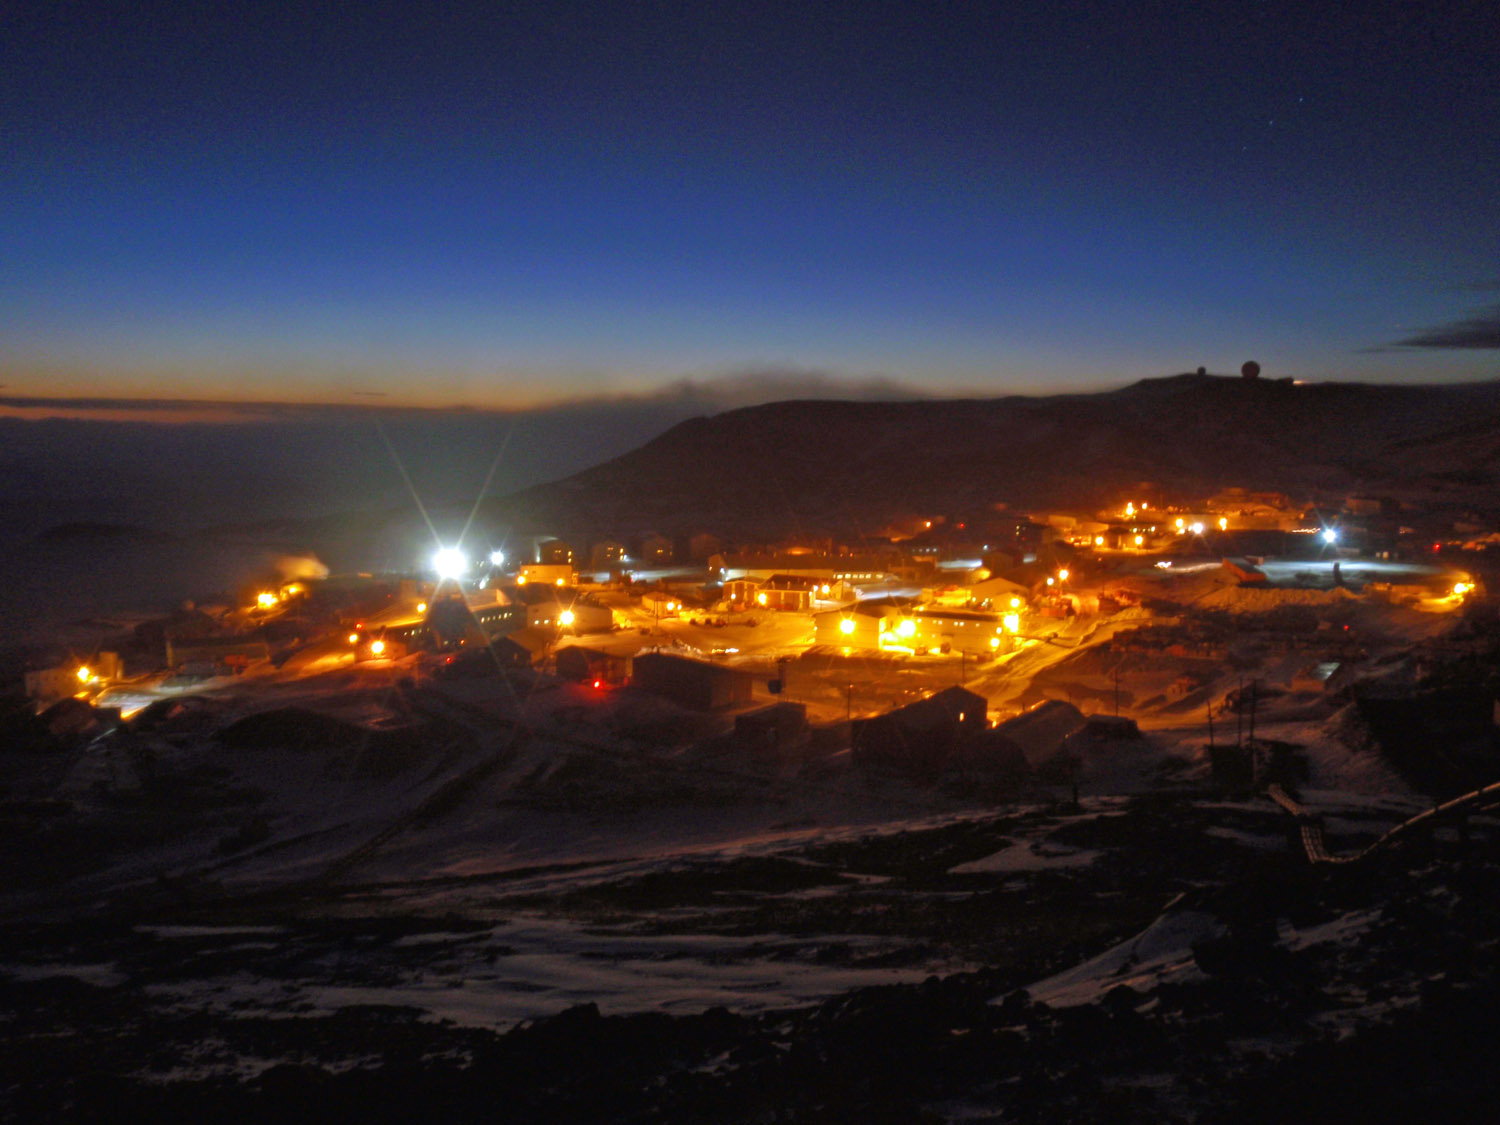 McMurdo Station at Night